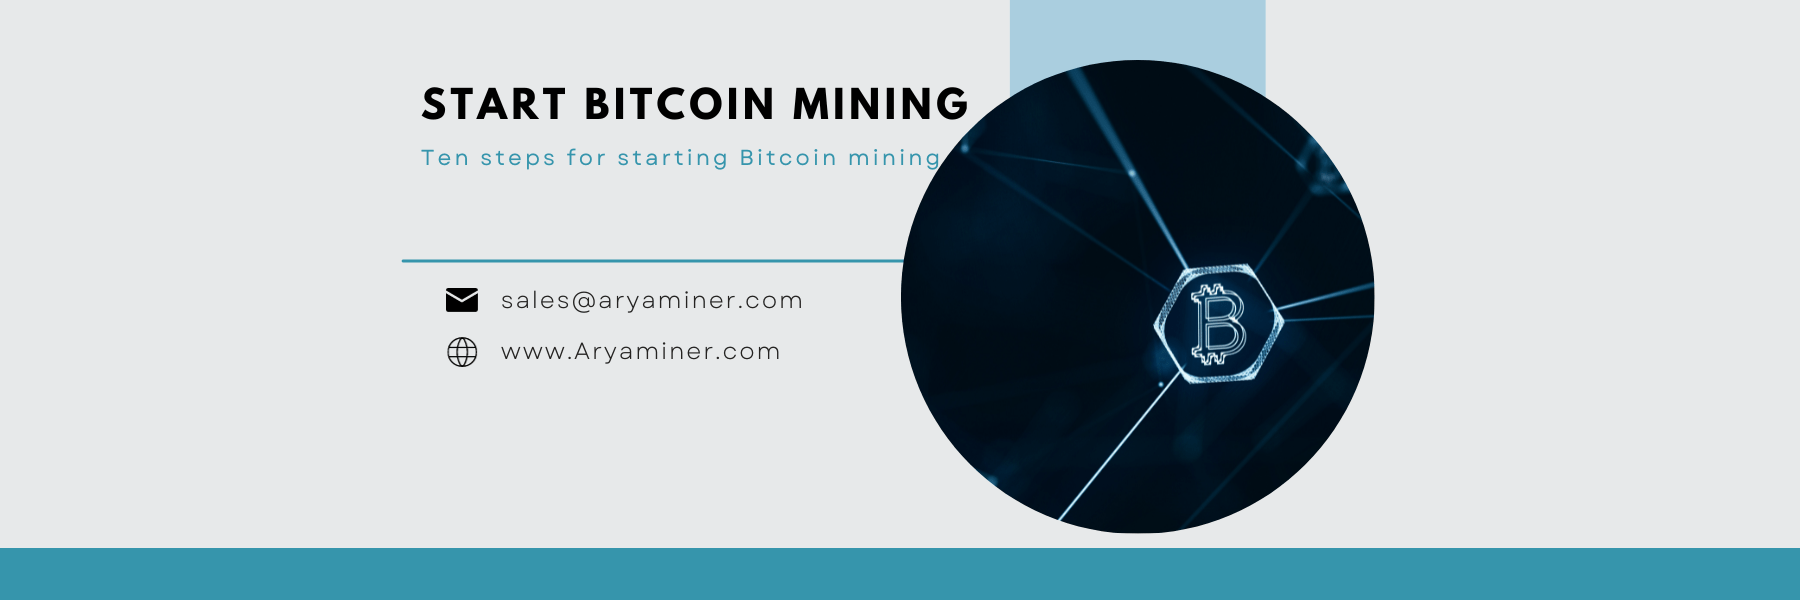 How to start Bitcoin mining? - Aryaminer